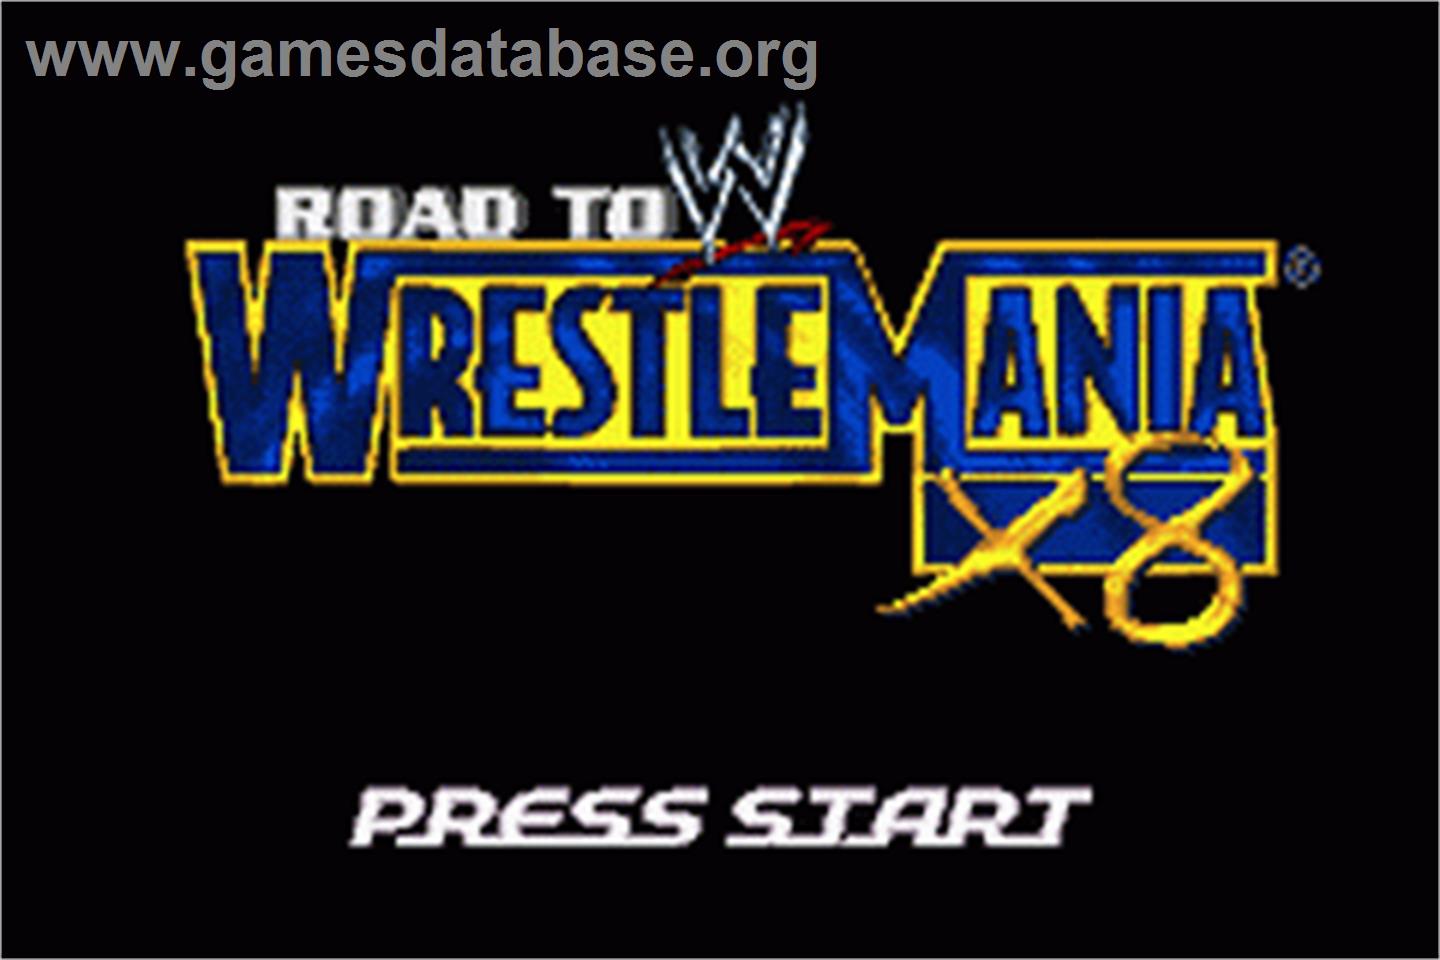 WWE Road to Wrestlemania X8 - Nintendo Game Boy Advance - Artwork - Title Screen